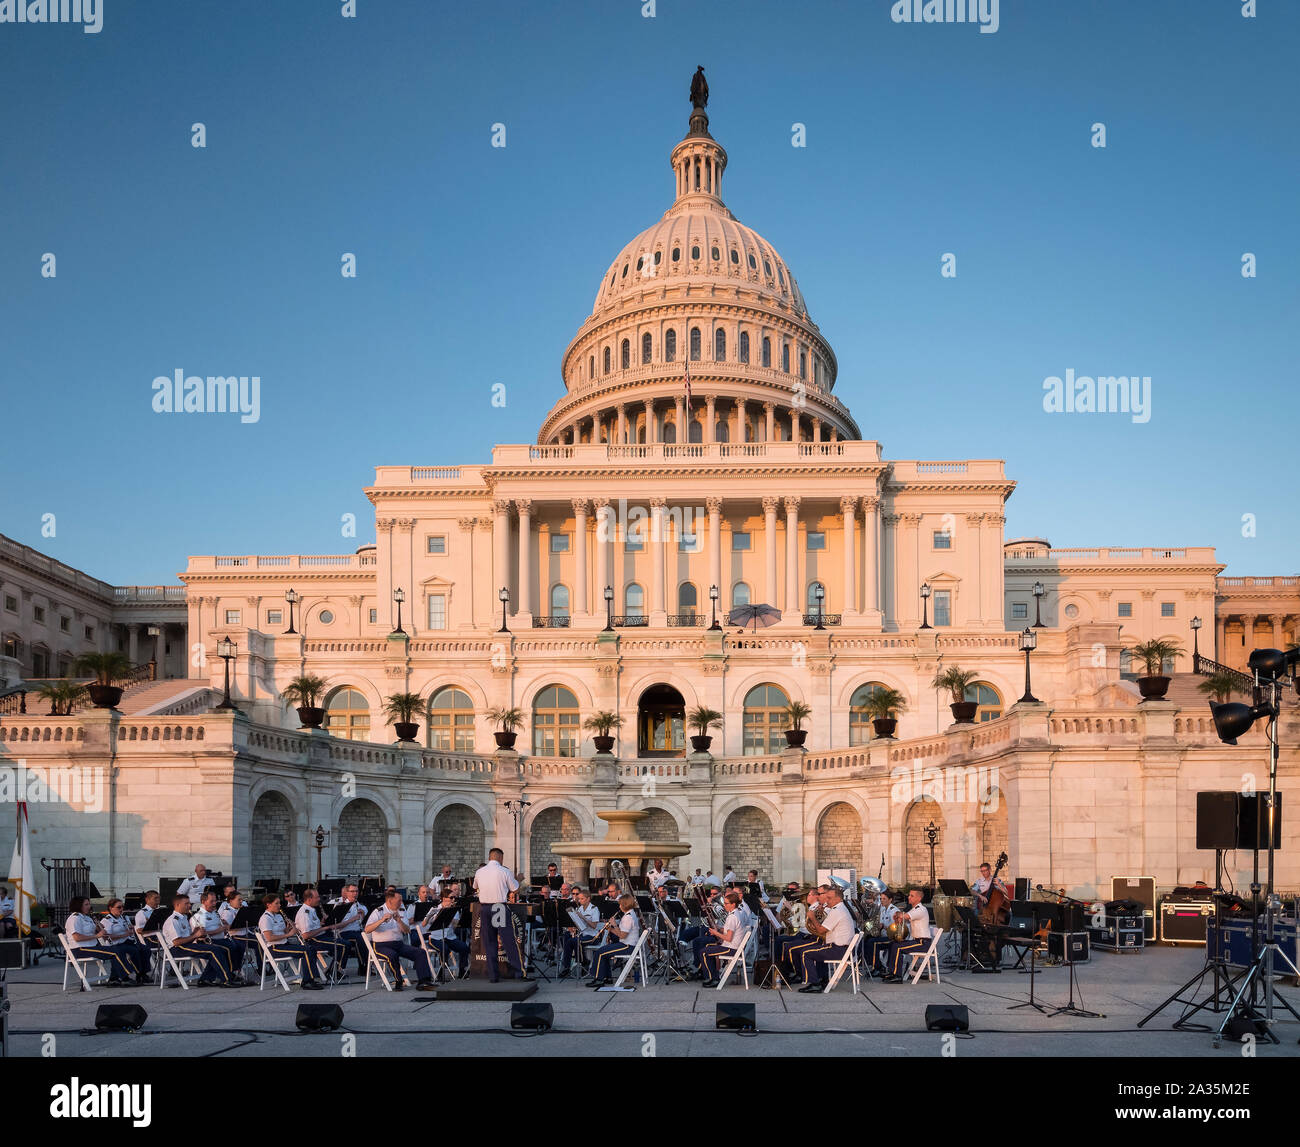 Military Band spielt vor der United States Capitol Building bei Sonnenuntergang, Capitol Hill, Washington DC, USA Stockfoto